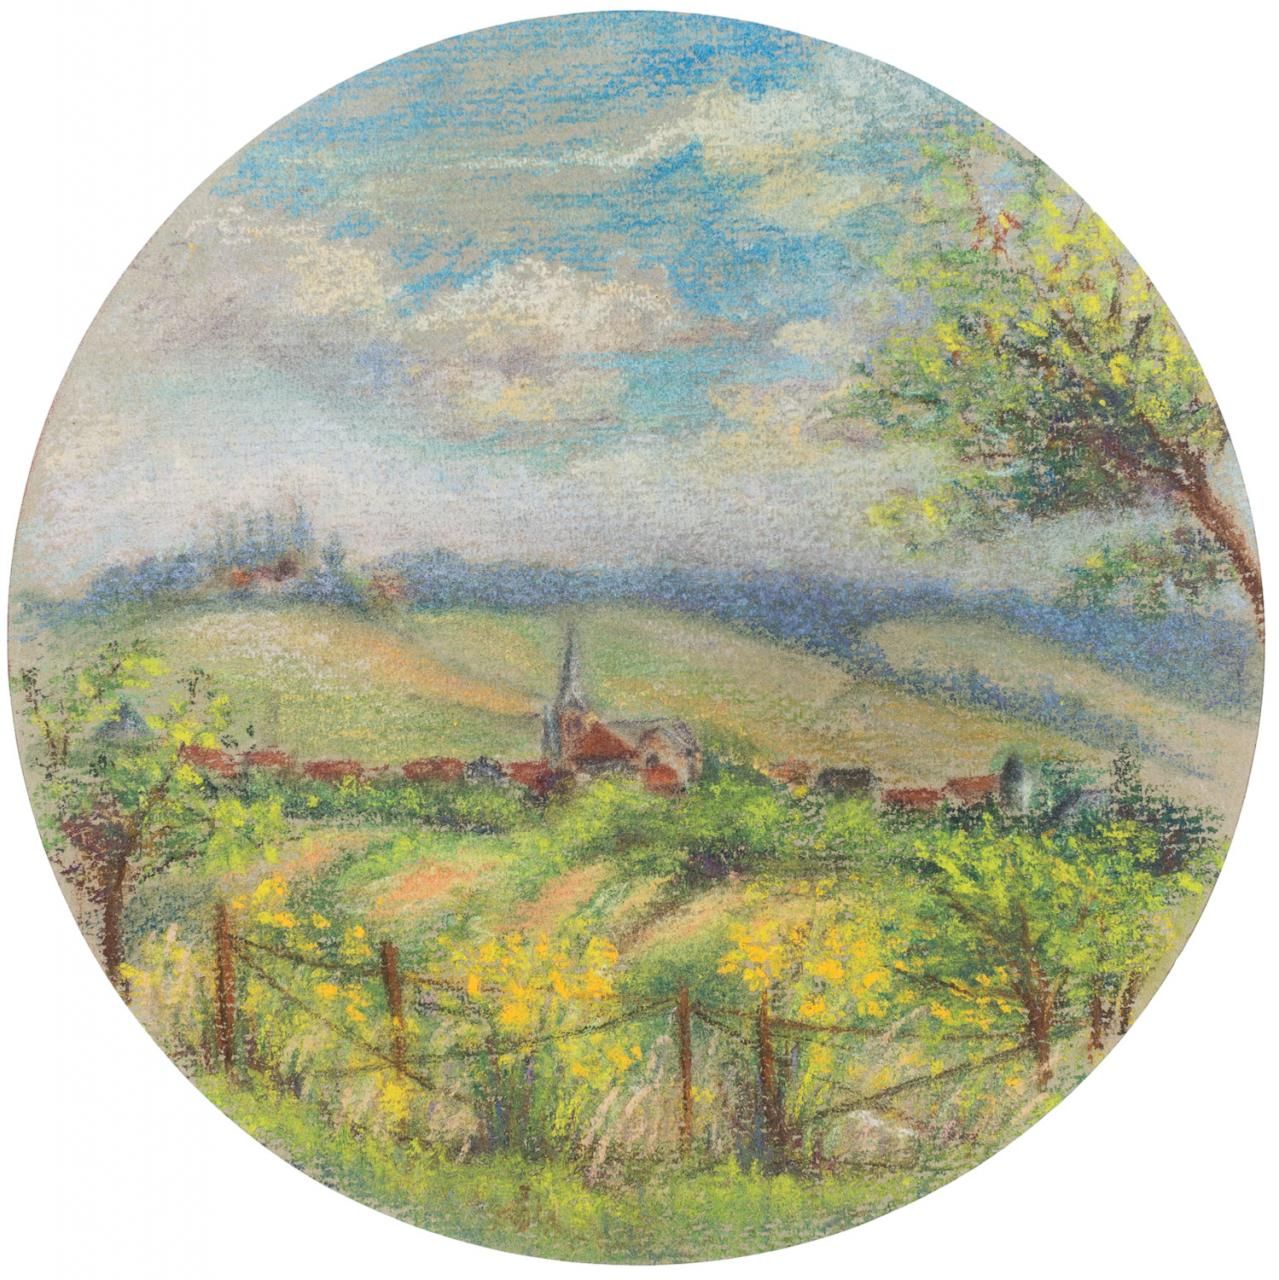 ESCUELA EUROPEA, S. XX Rural landscape
Pastel drawing on paper
18 cm diameter